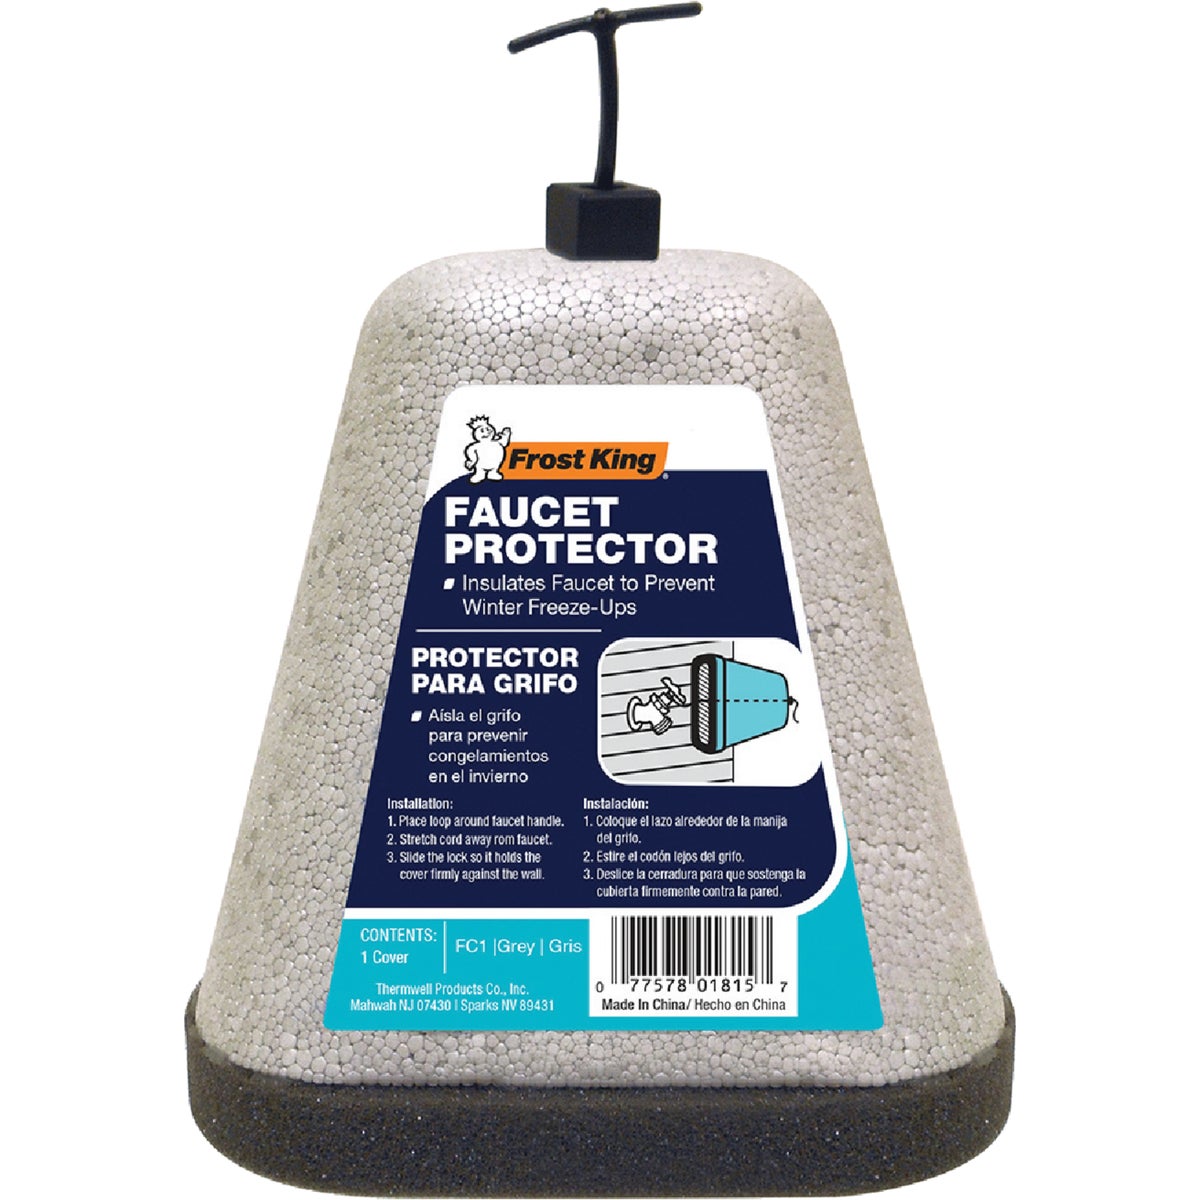 Item 462217, Oval foam inside faucet protector.